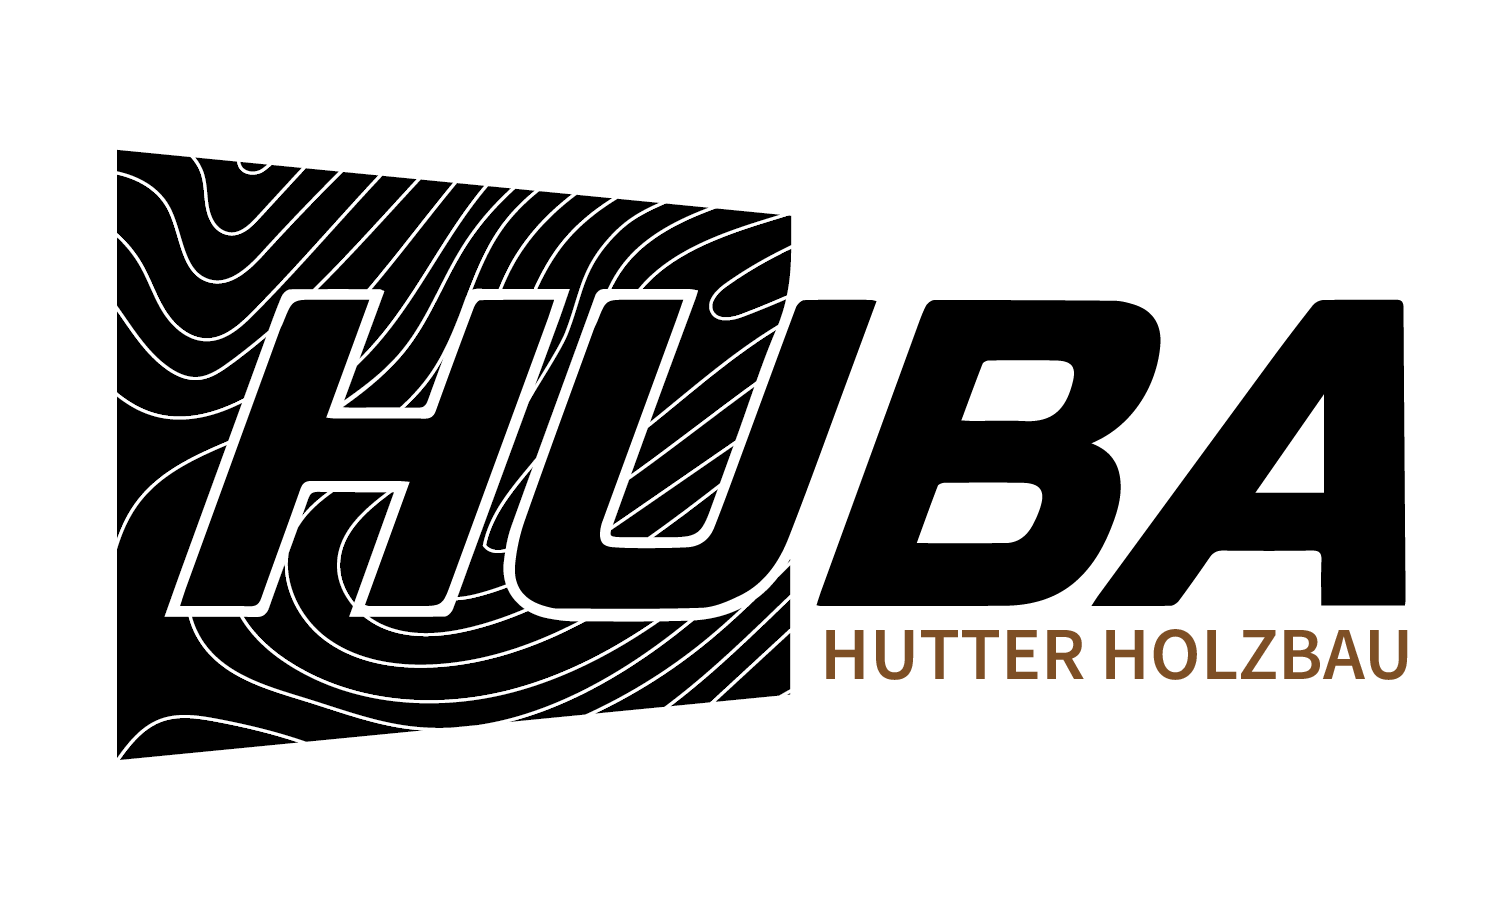 HUBA - Hutter Holzbau